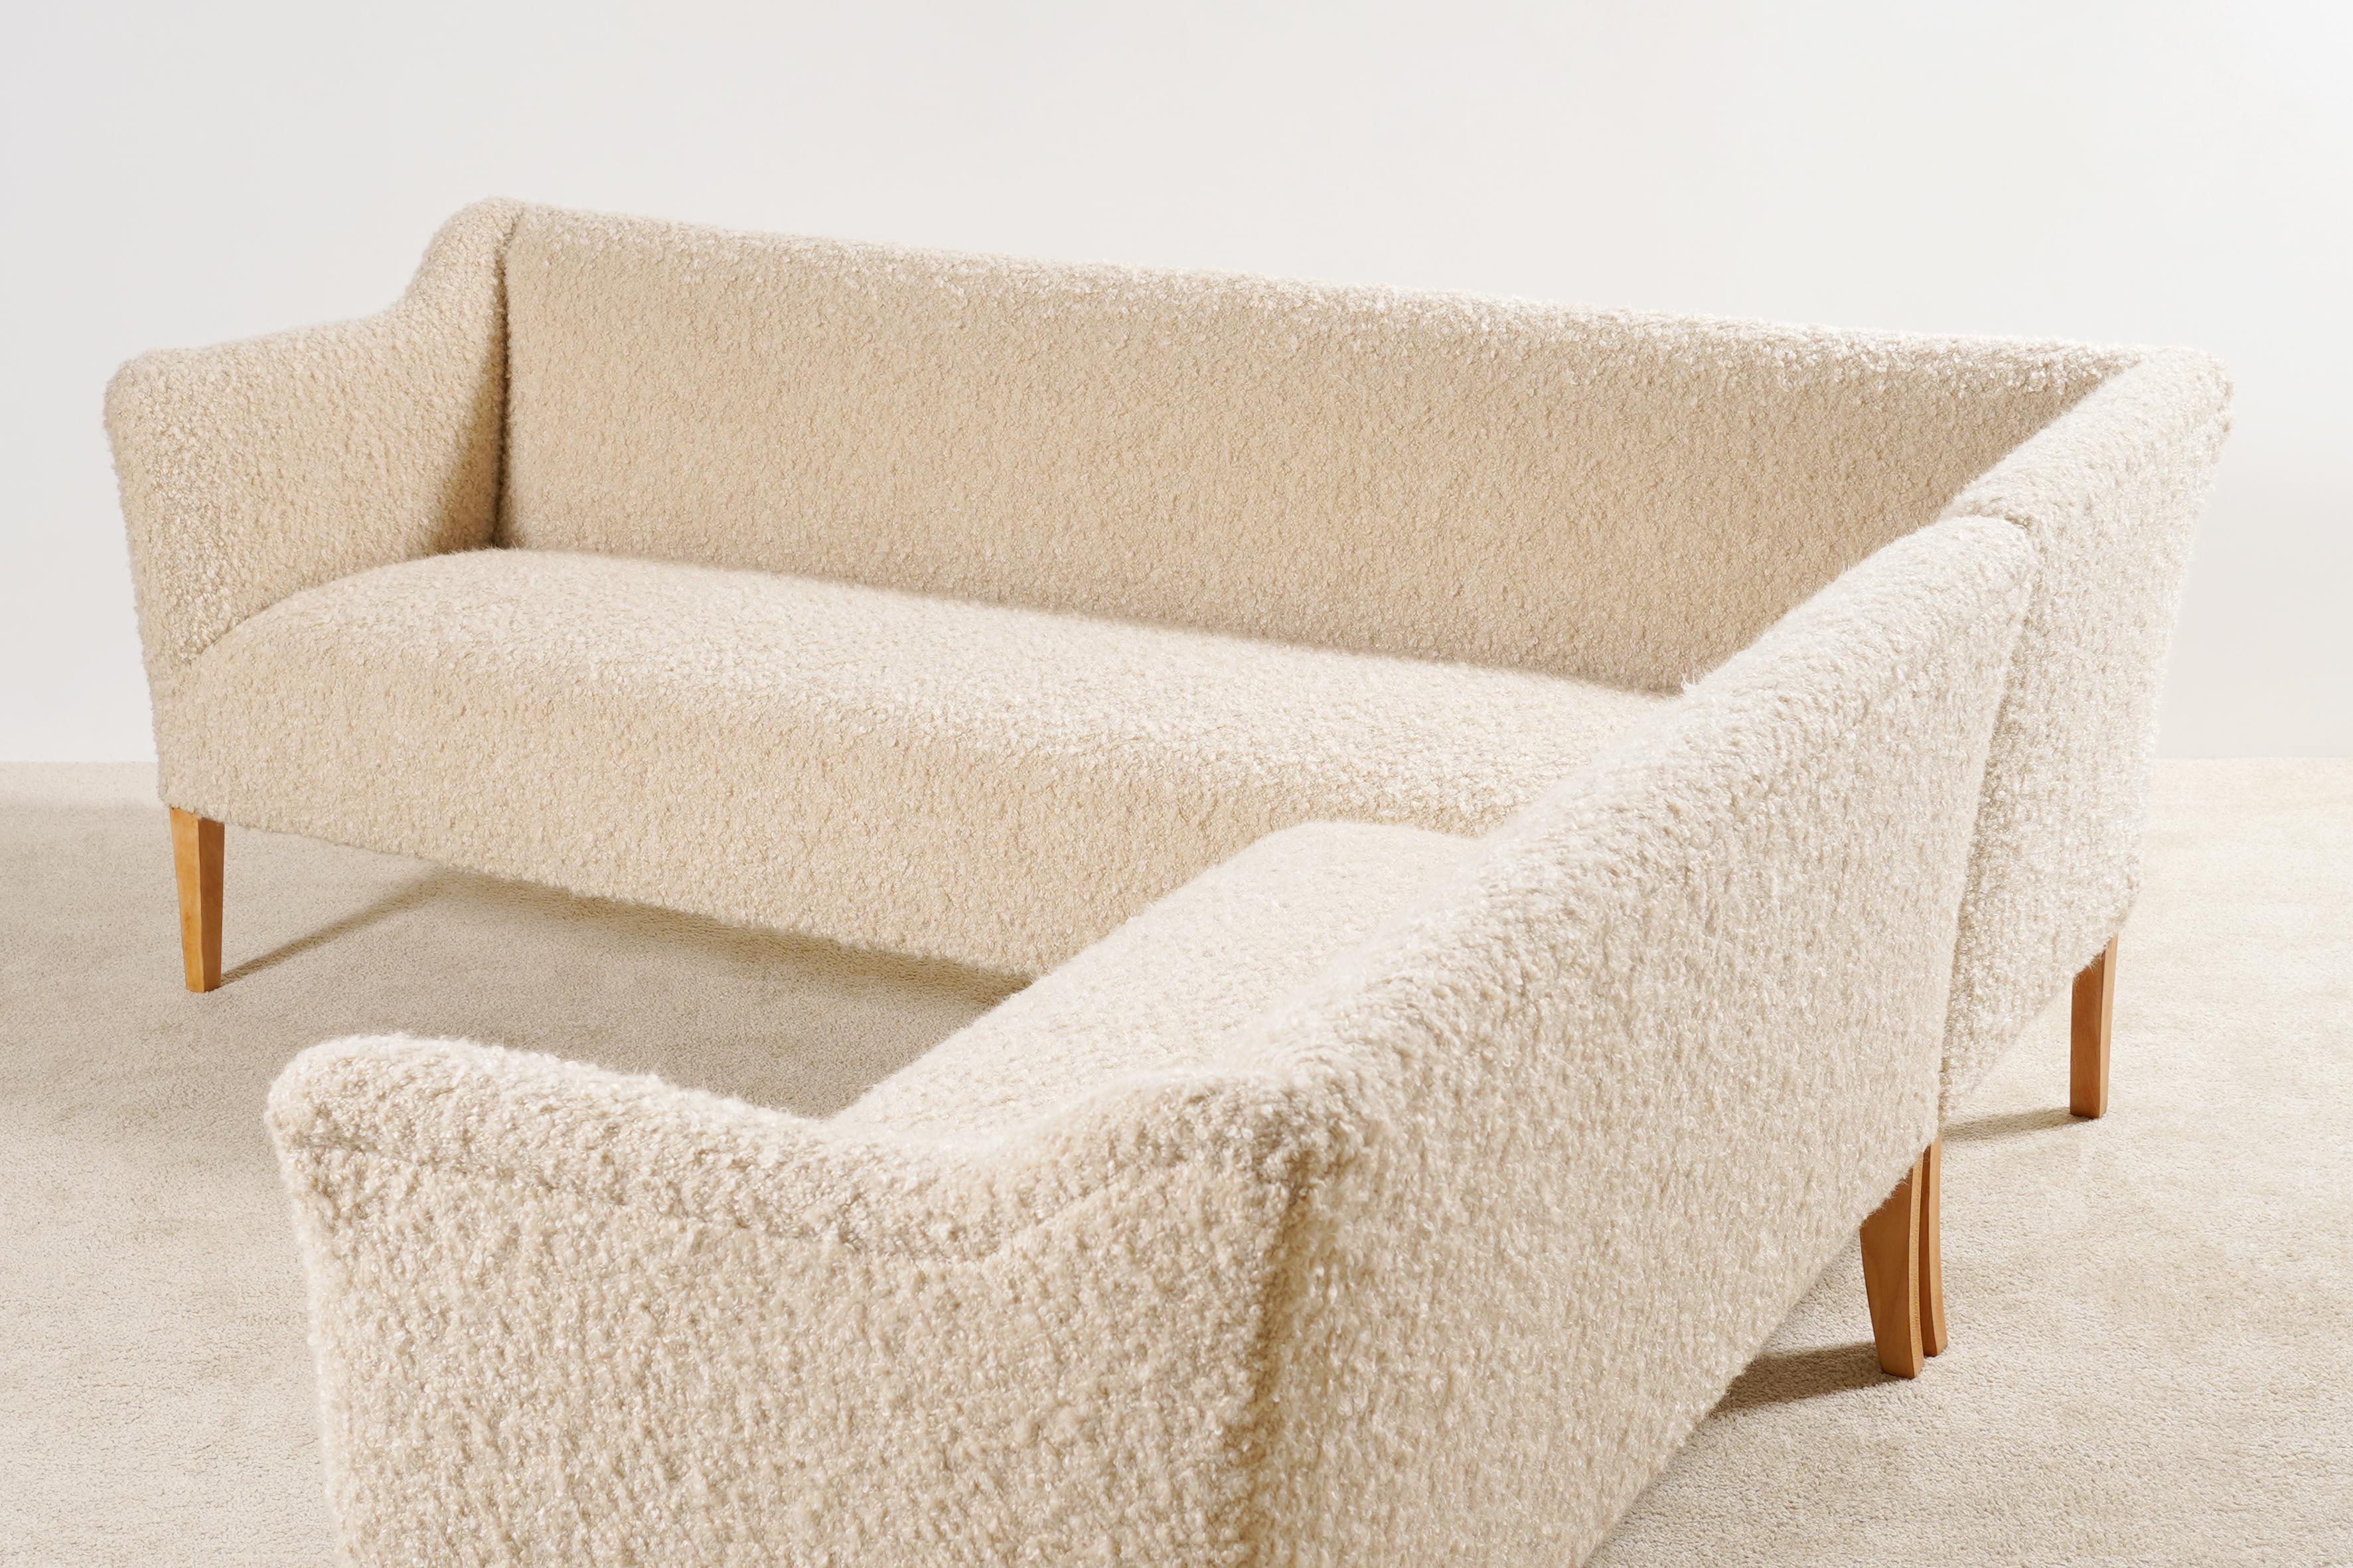 Fabric Danish Corner Sofa, Original Piece from the 1950s Newly Upholstered